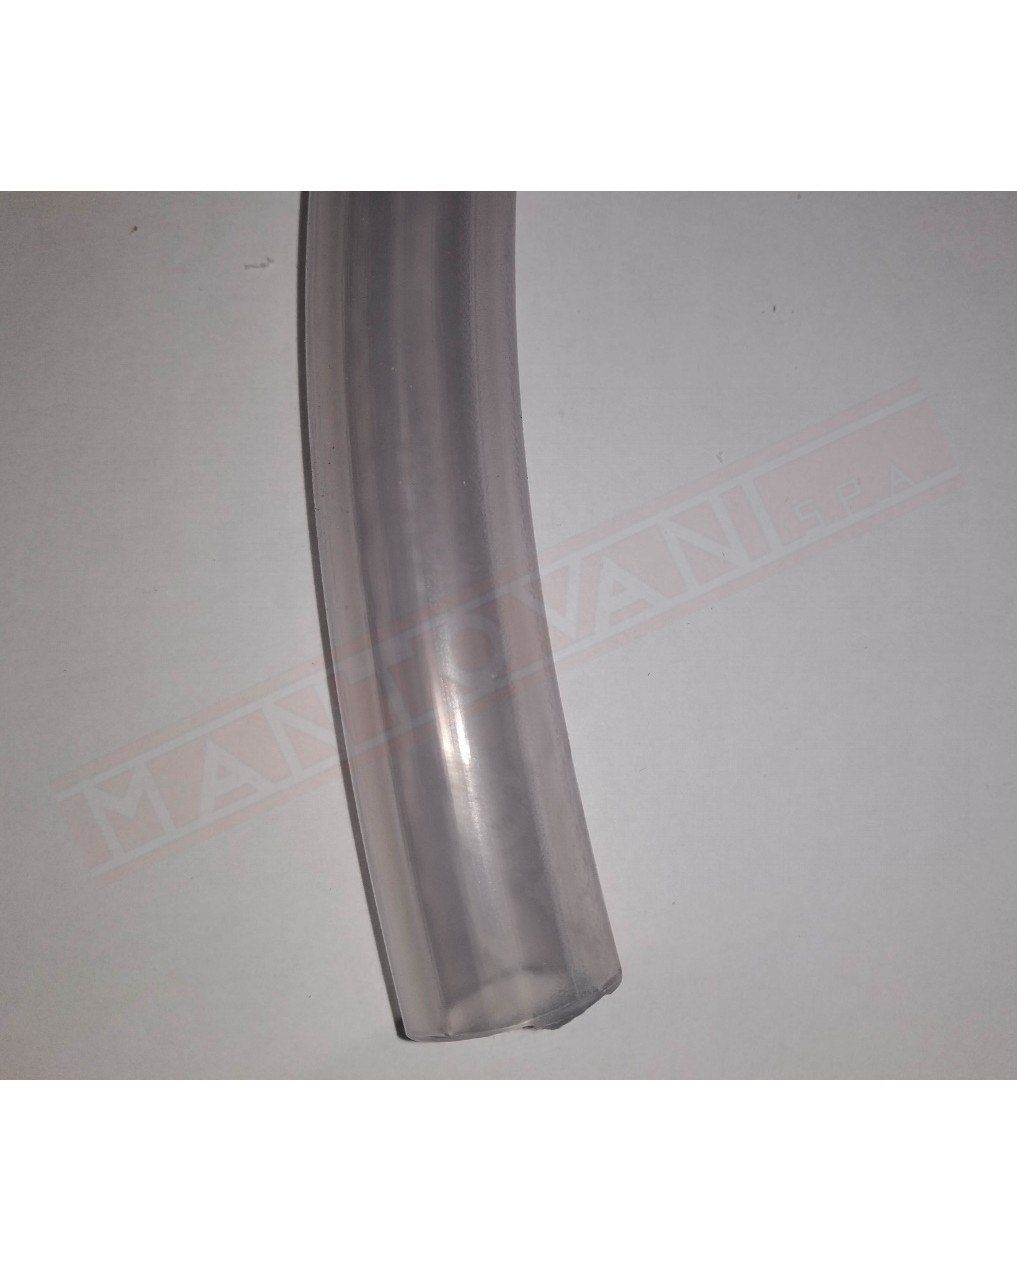 tubo cristallo atossico 14X19